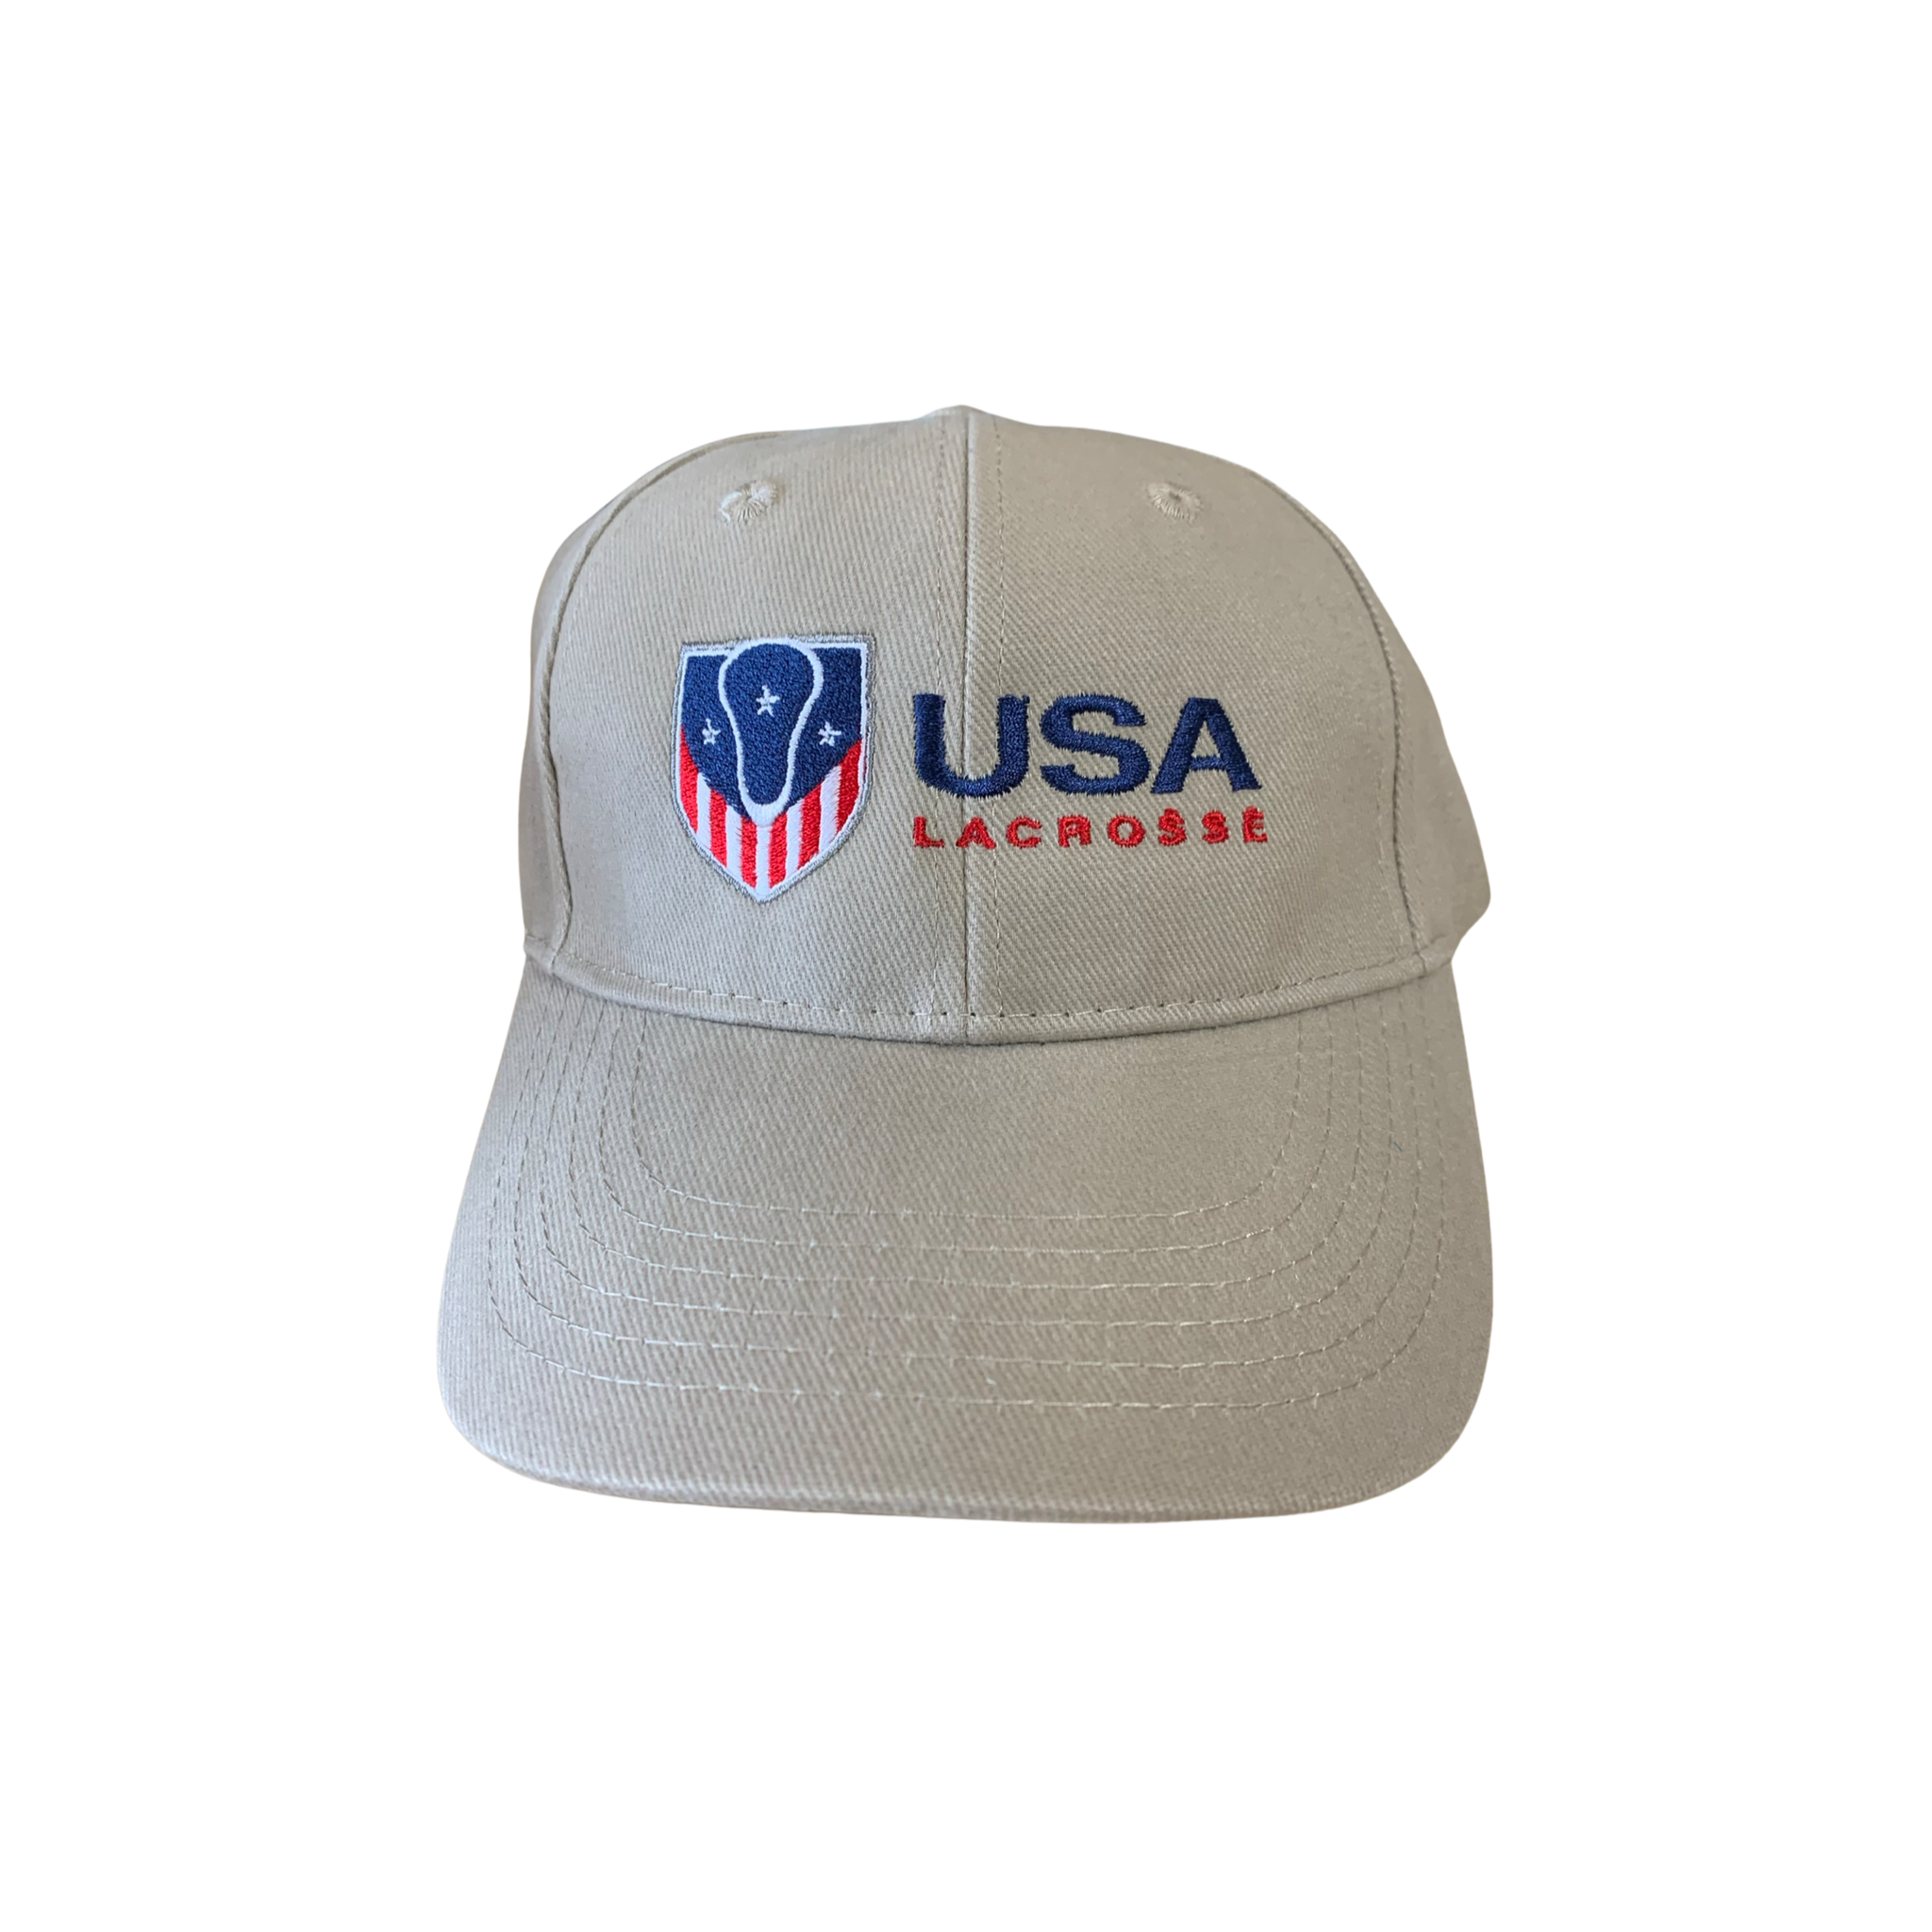 USA Lacrosse Brushed Twill Hat